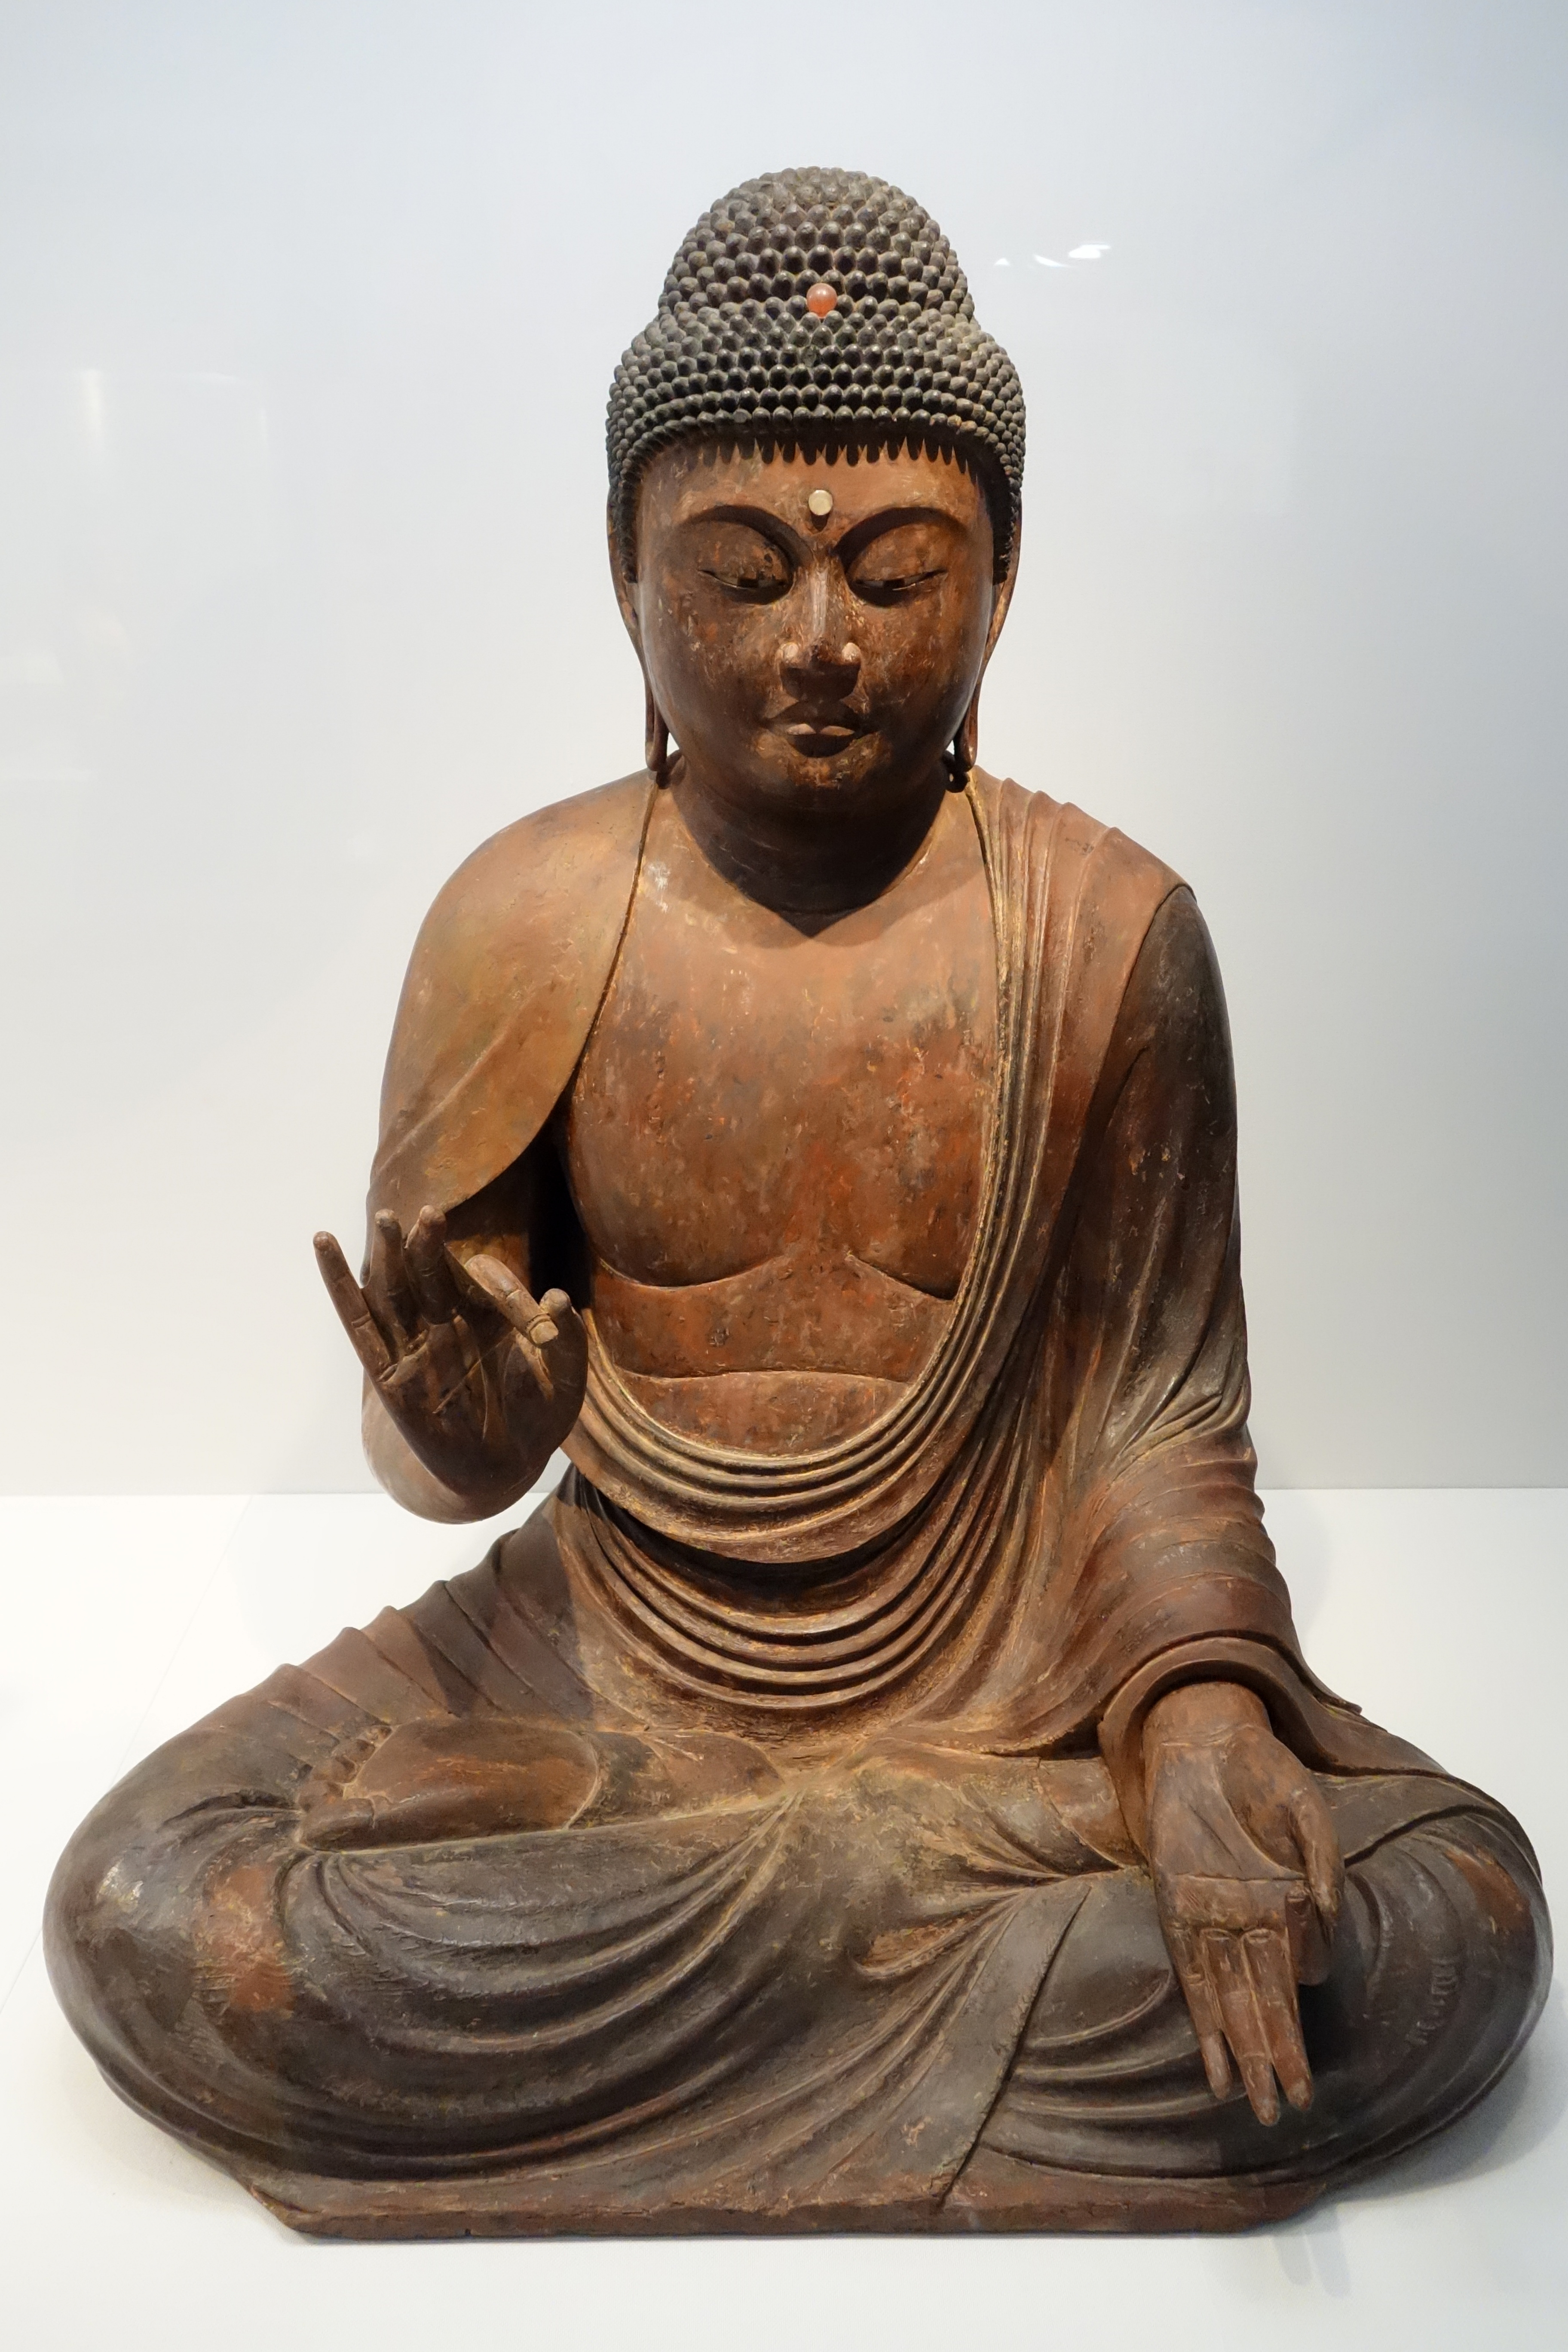 buddha meaning